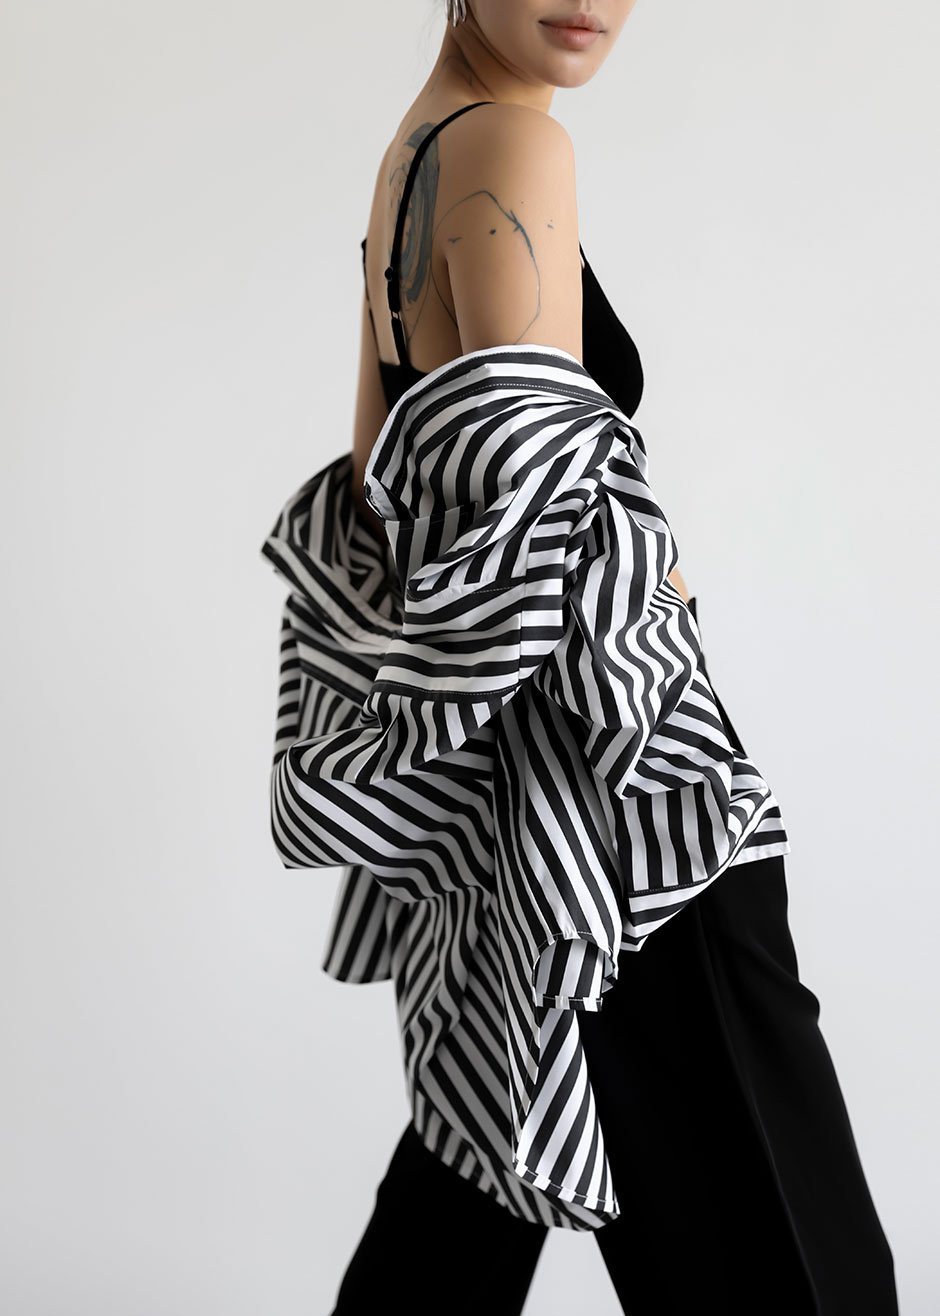 Sylvia Striped Oxford Shirt - Faded Black/White – The Frankie Shop